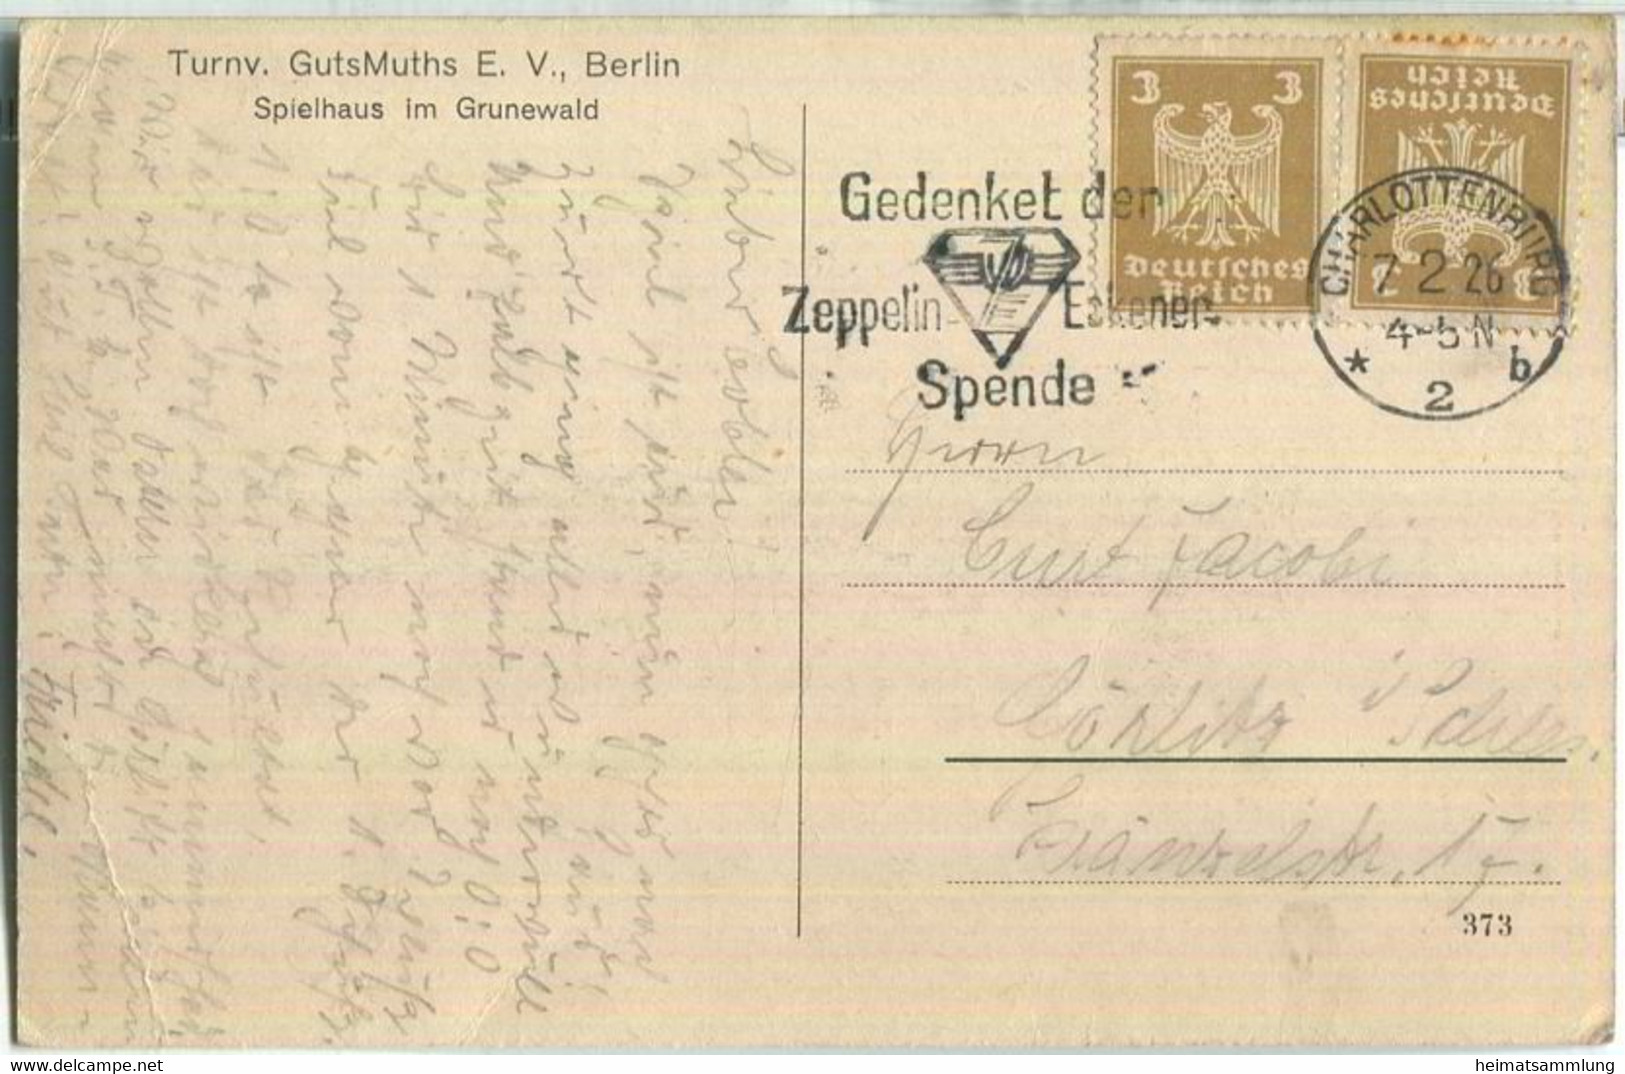 Berlin - Grunewald - Turnverein GutsMuths E. V. - Spielhaus - Grunewald